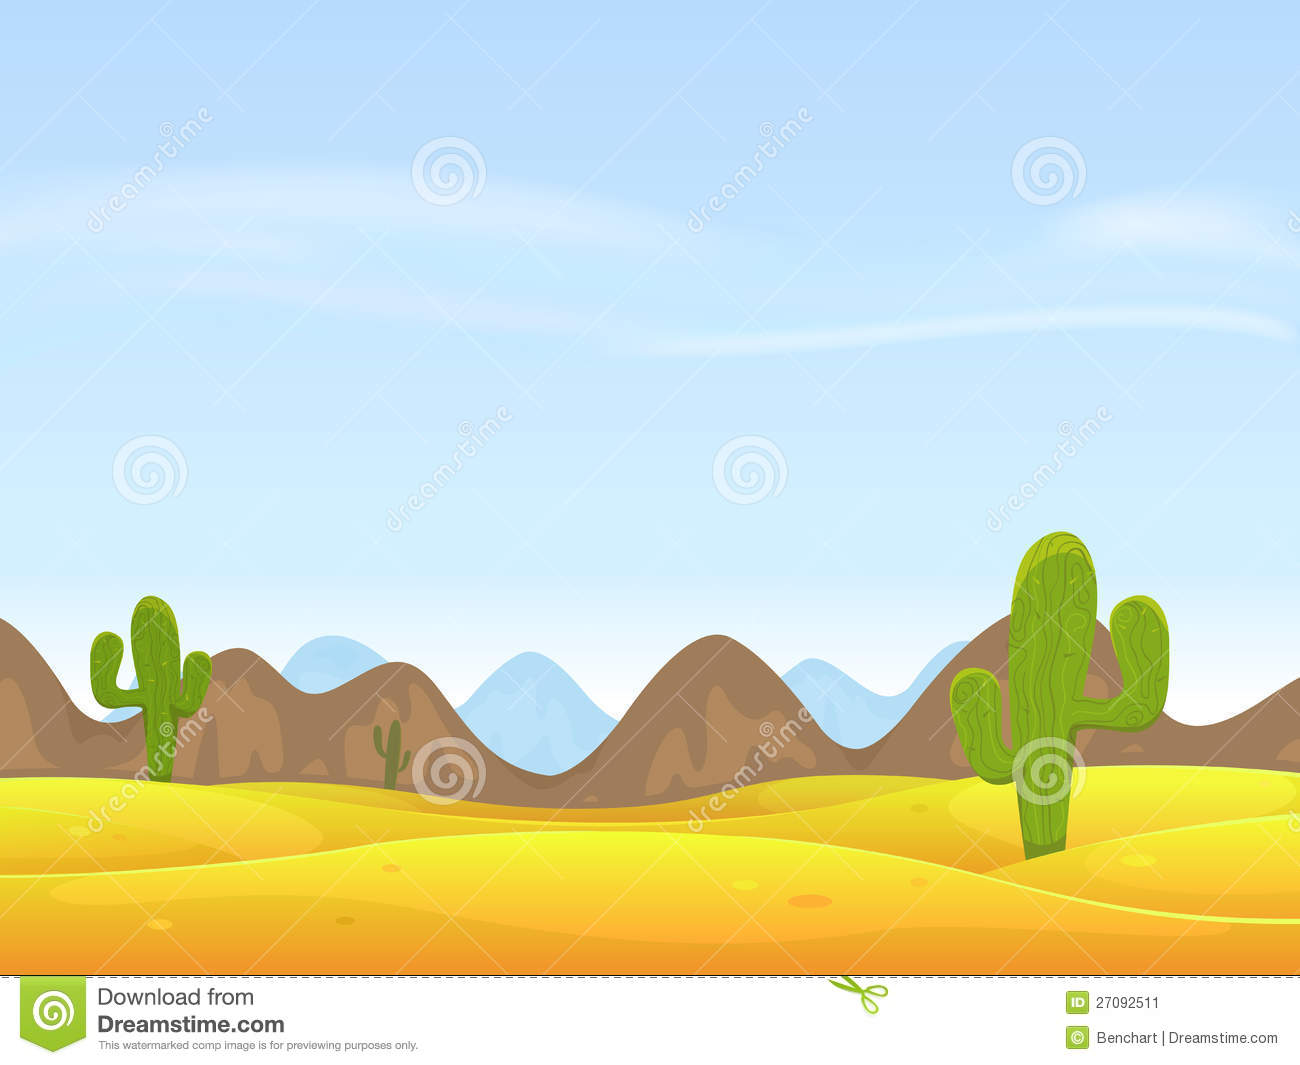 Illustration Of A Cartoon Desert Landscape With Cactus Sand Dunes